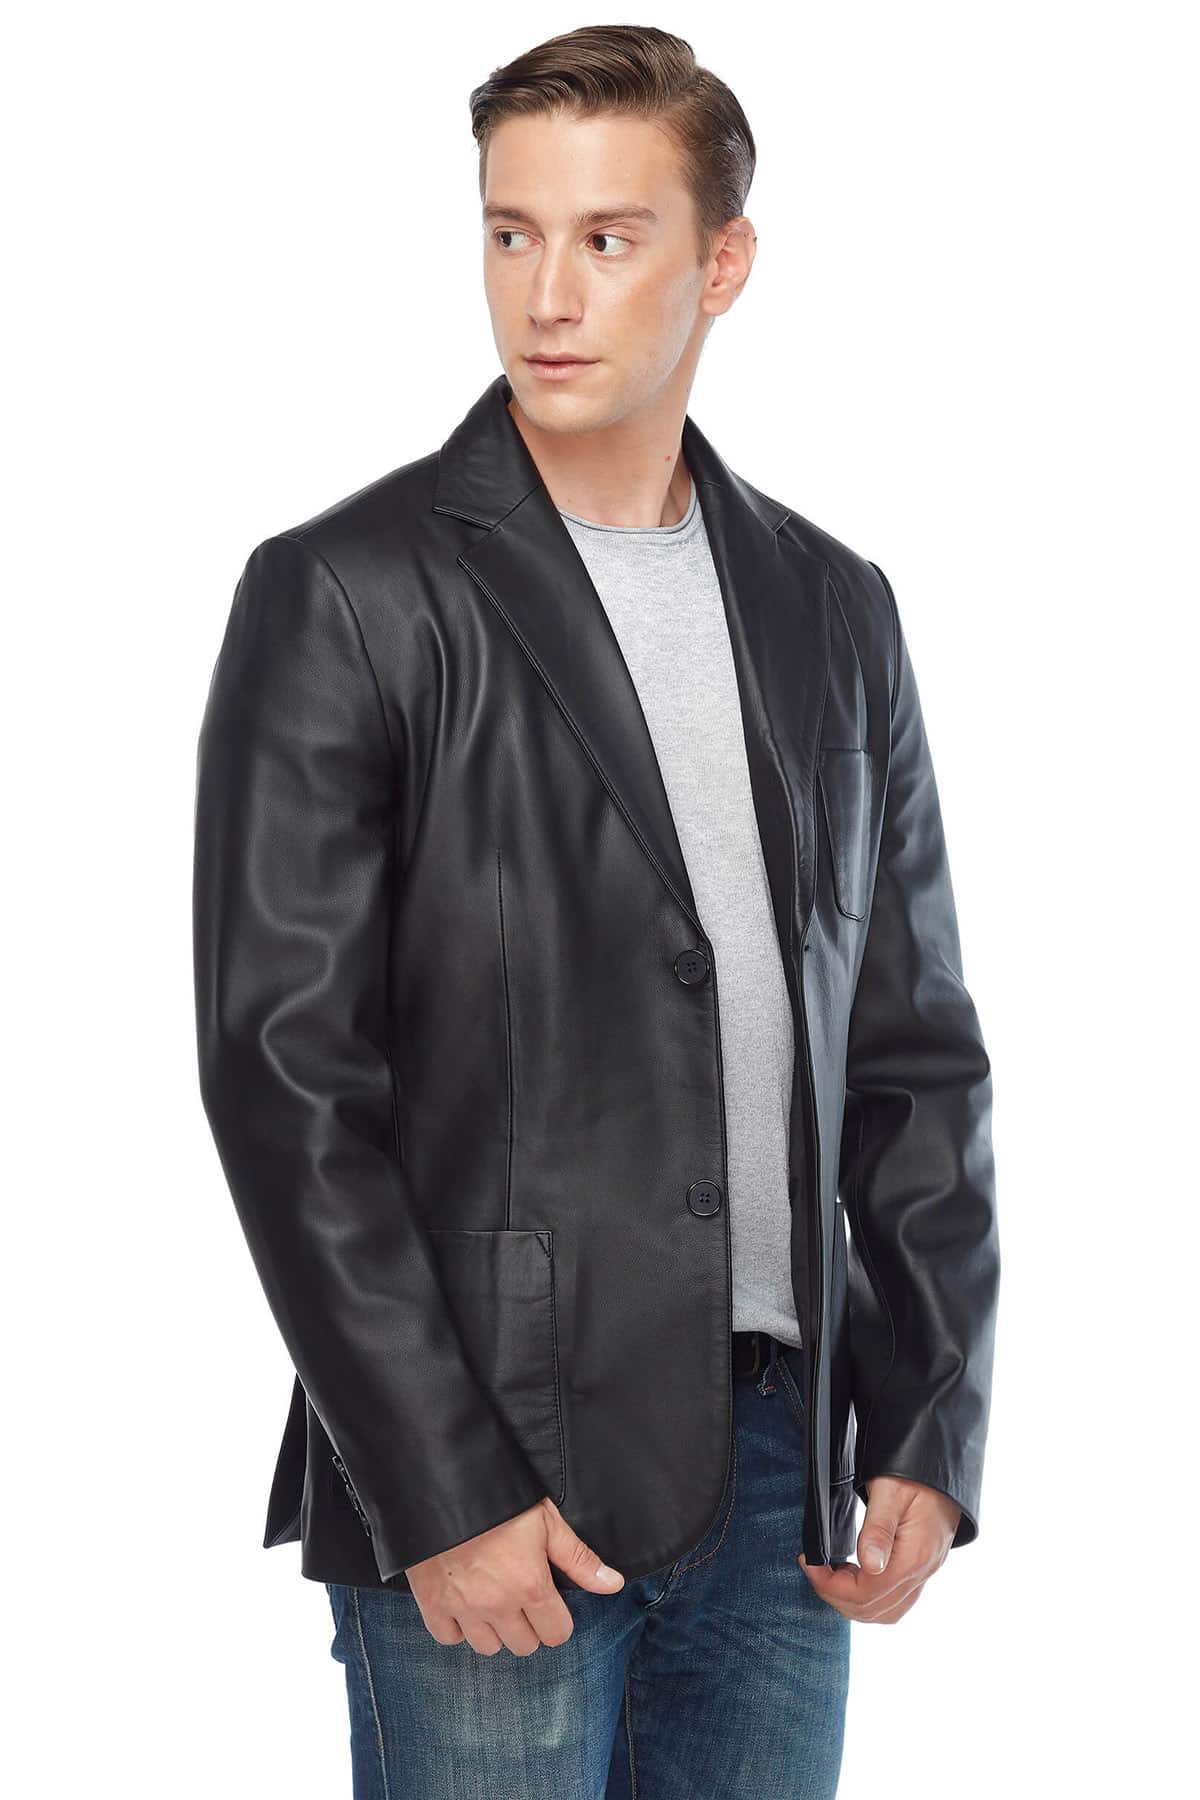 Stephen James Black Blazer Leather Jacket3